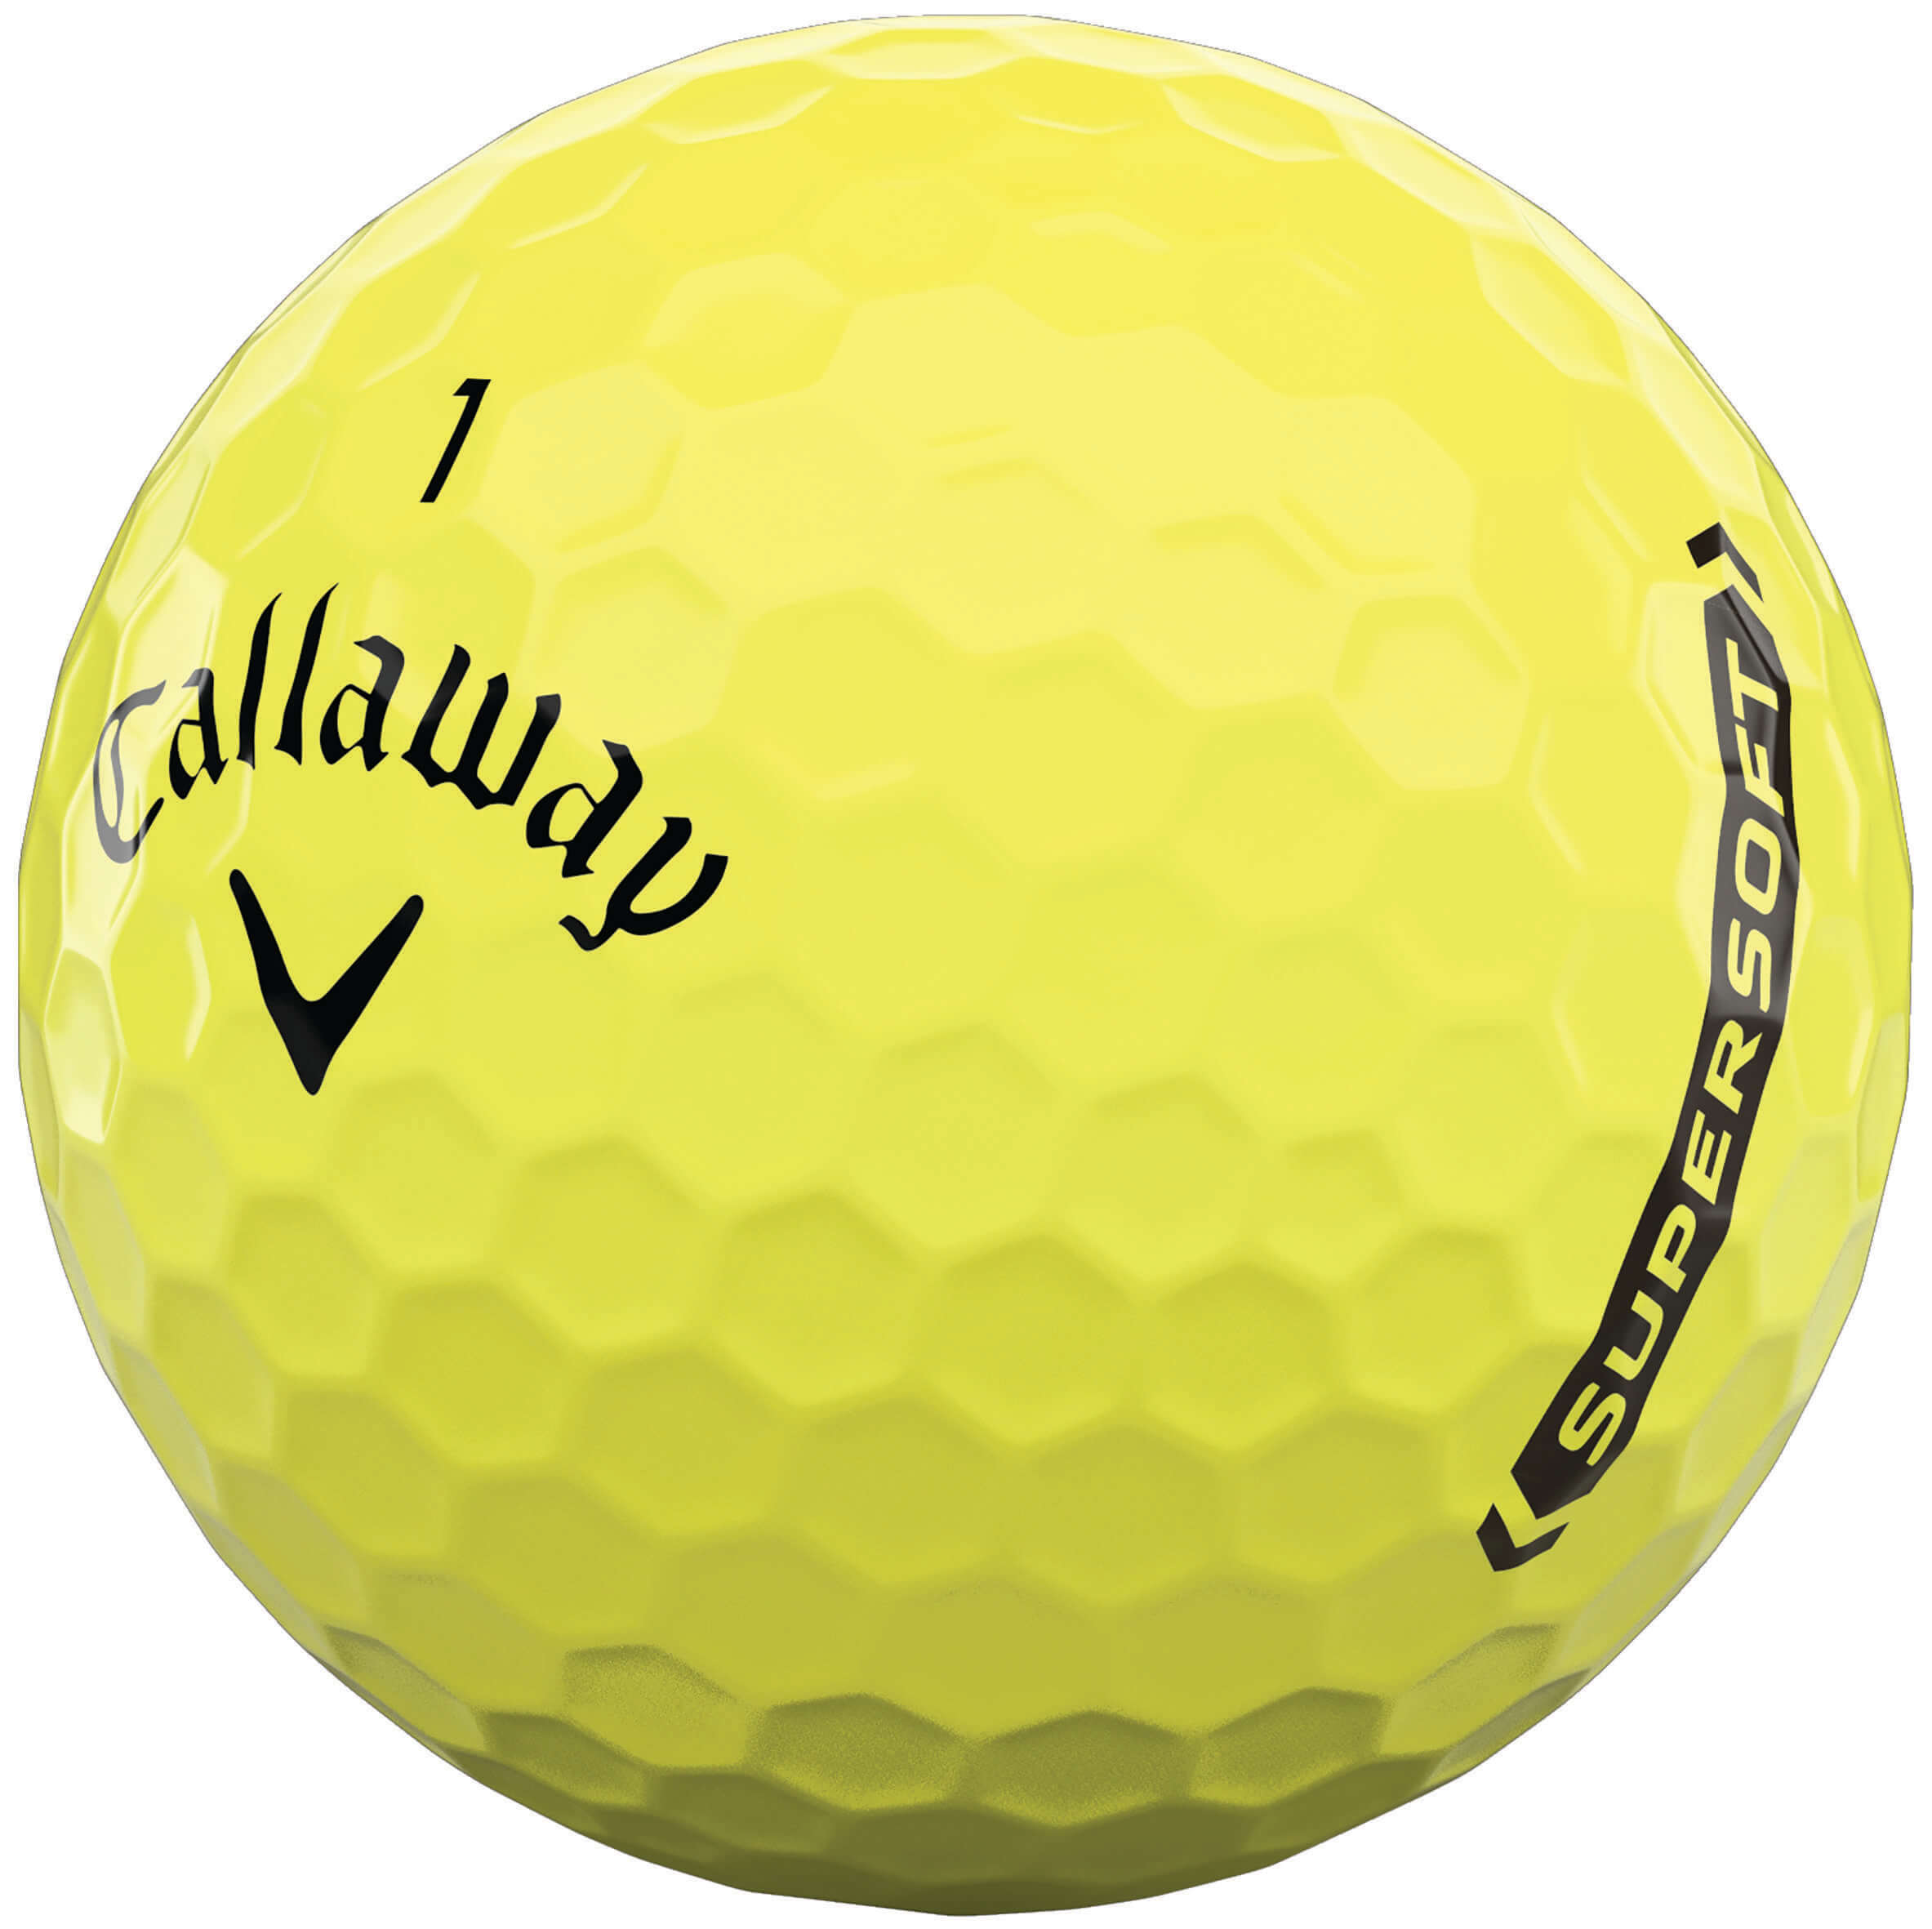 Callaway Supersoft Golfbälle, yellow